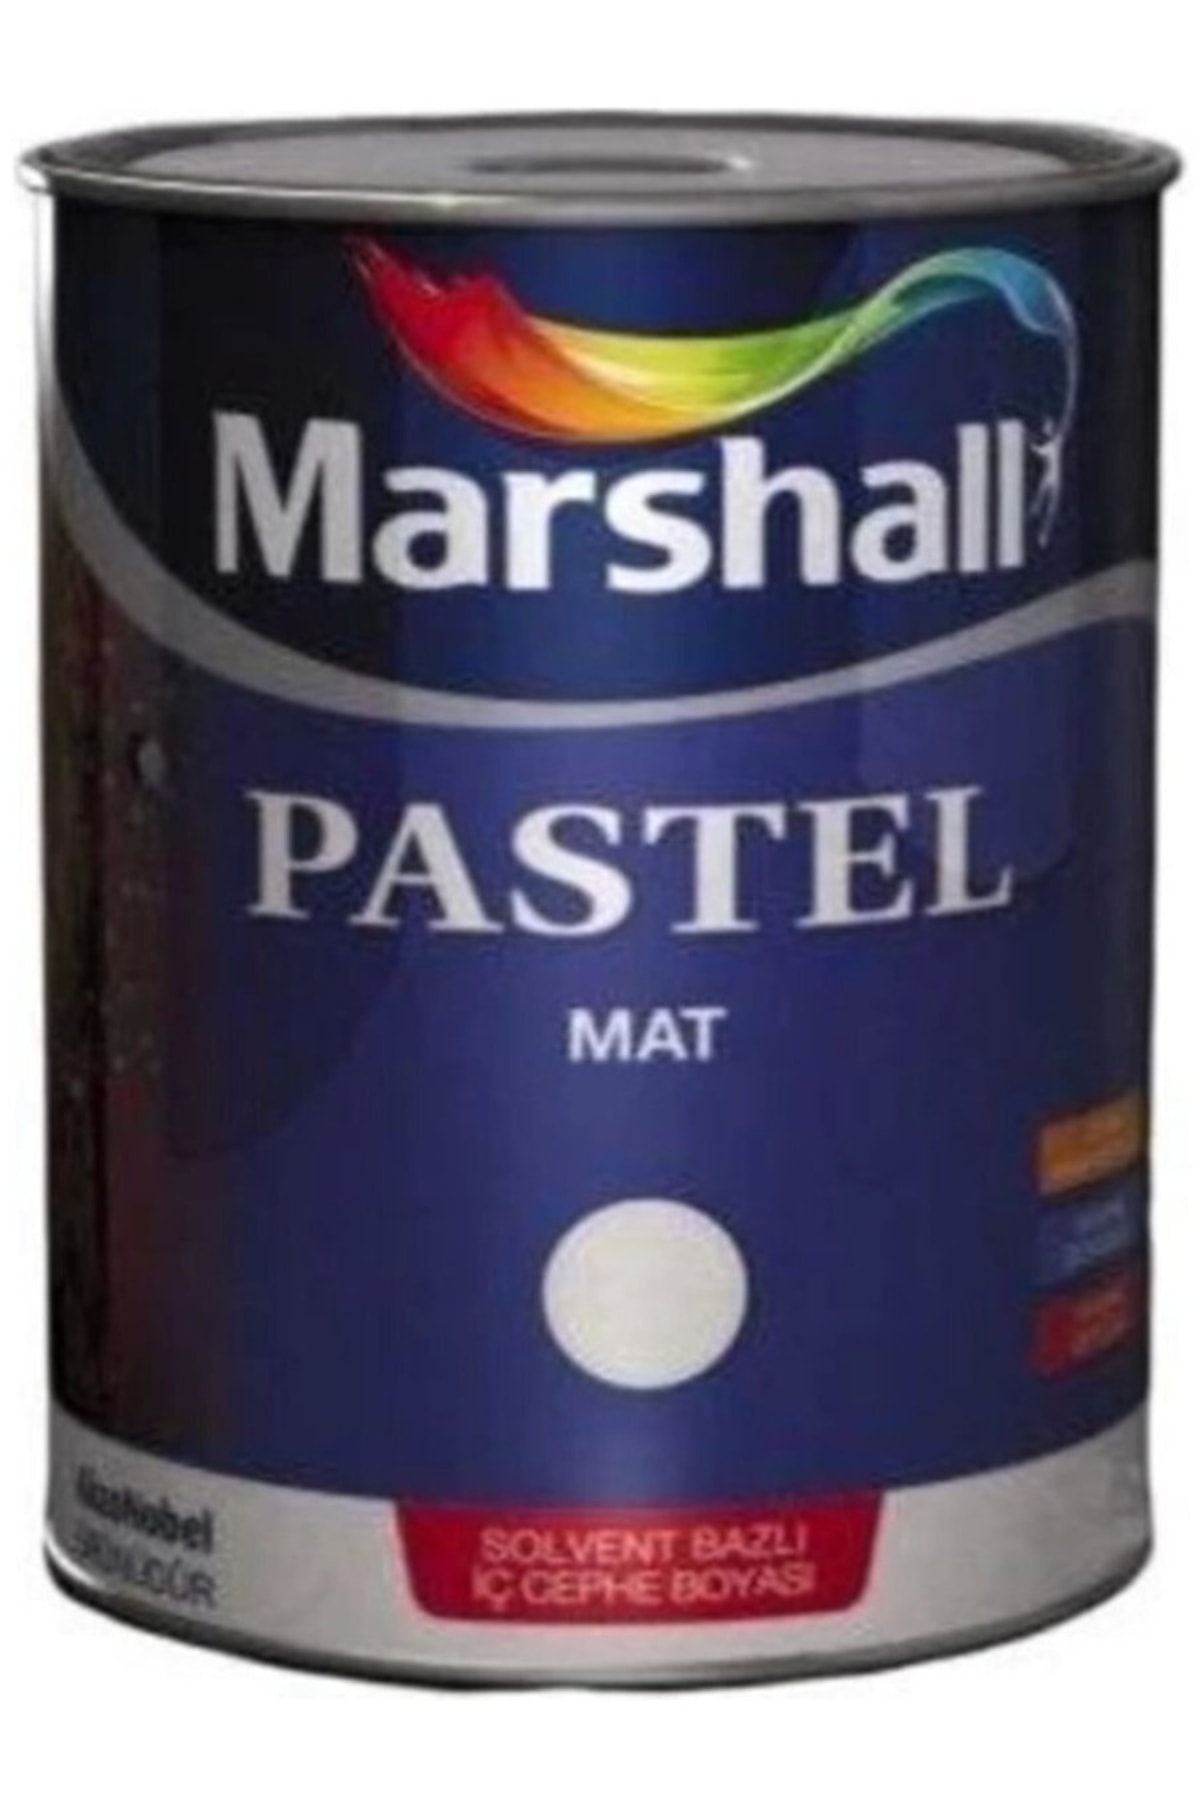 Marshall Pastel Mat Yağlı Boya 2,5 litre BEYAZ